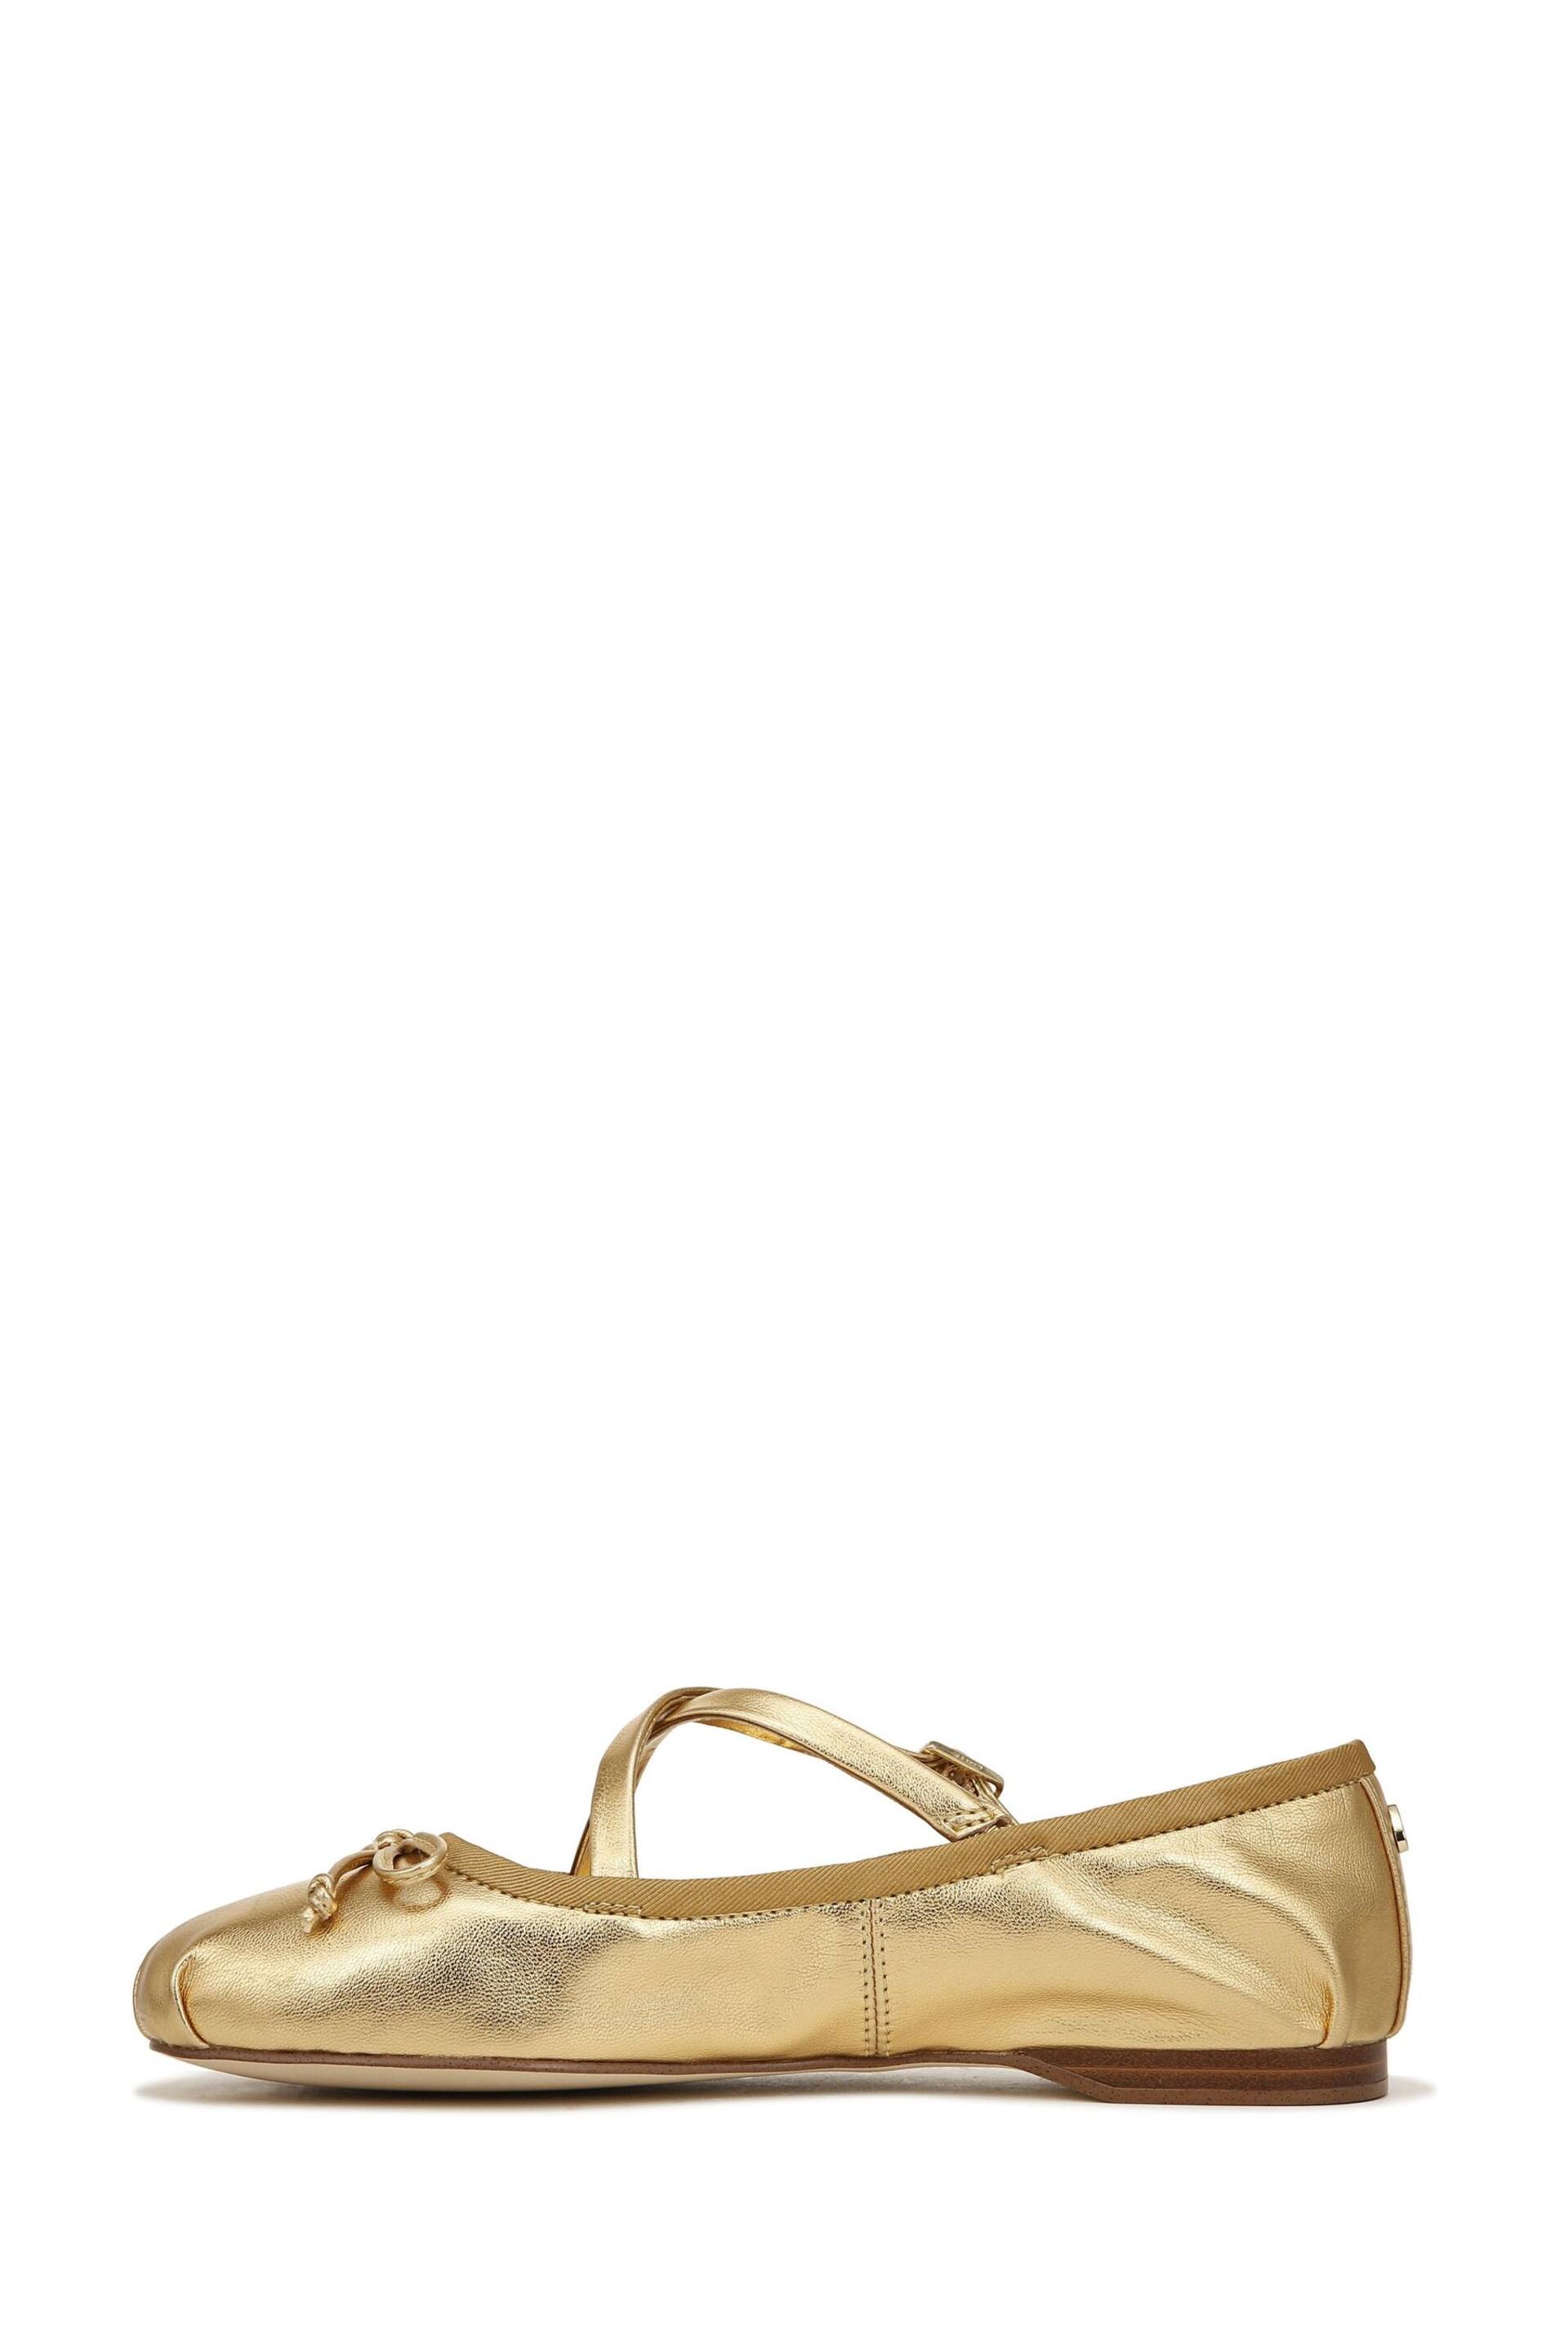 Circus NY Gold Zuri Ballerina Shoes - Image 2 of 7